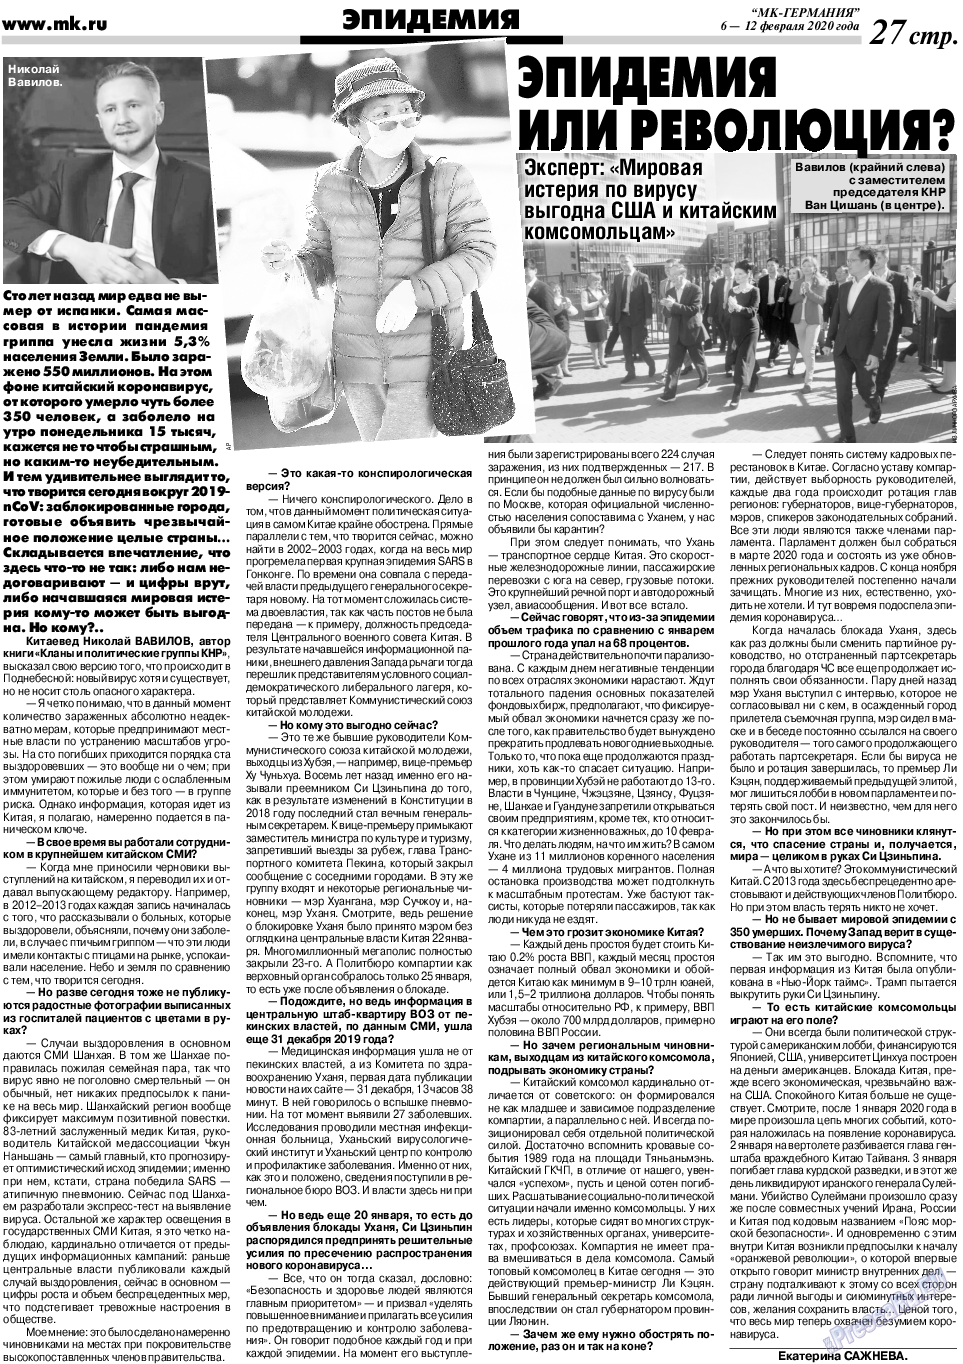 МК-Германия, газета. 2020 №6 стр.27